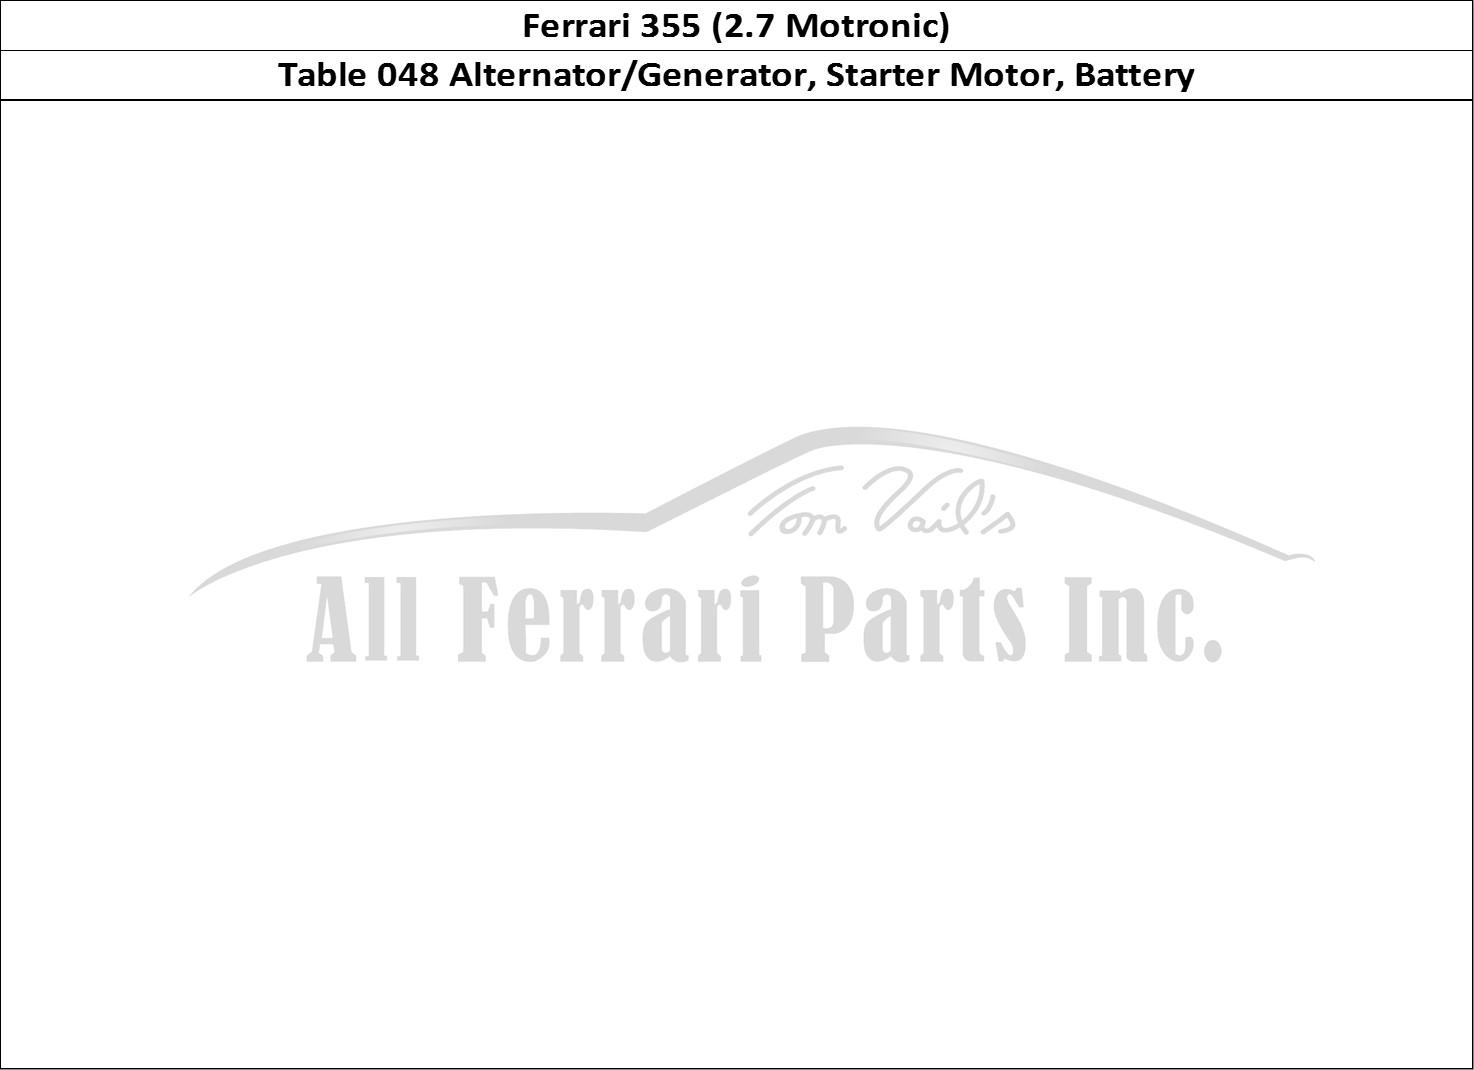 Ferrari Parts Ferrari 355 (2.7 Motronic) Page 048 Current Generator - Start